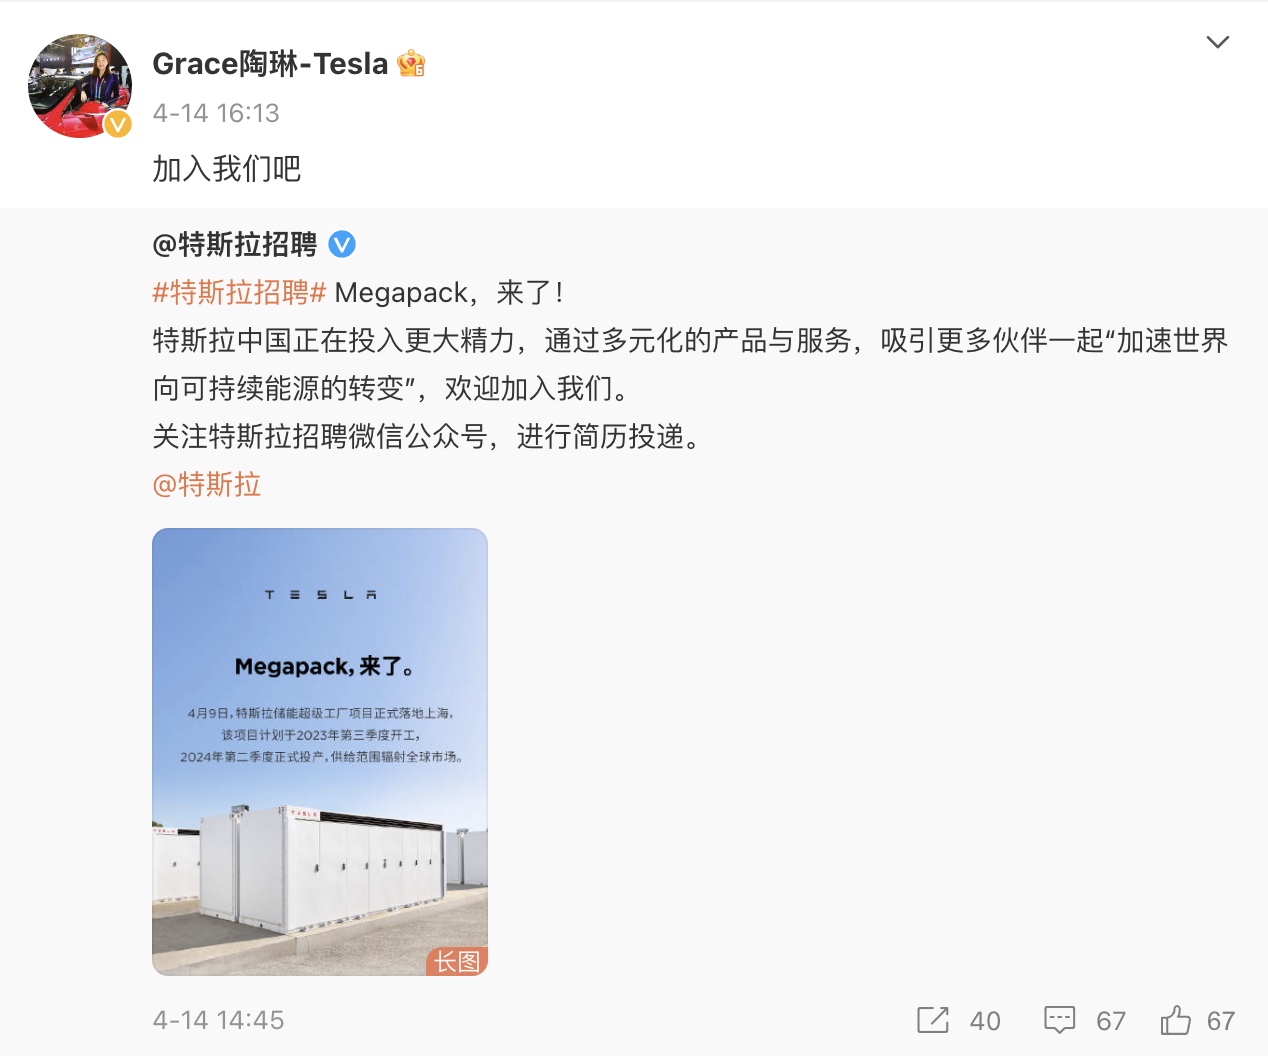 Tesla-china-megapack-factory-jobs-1